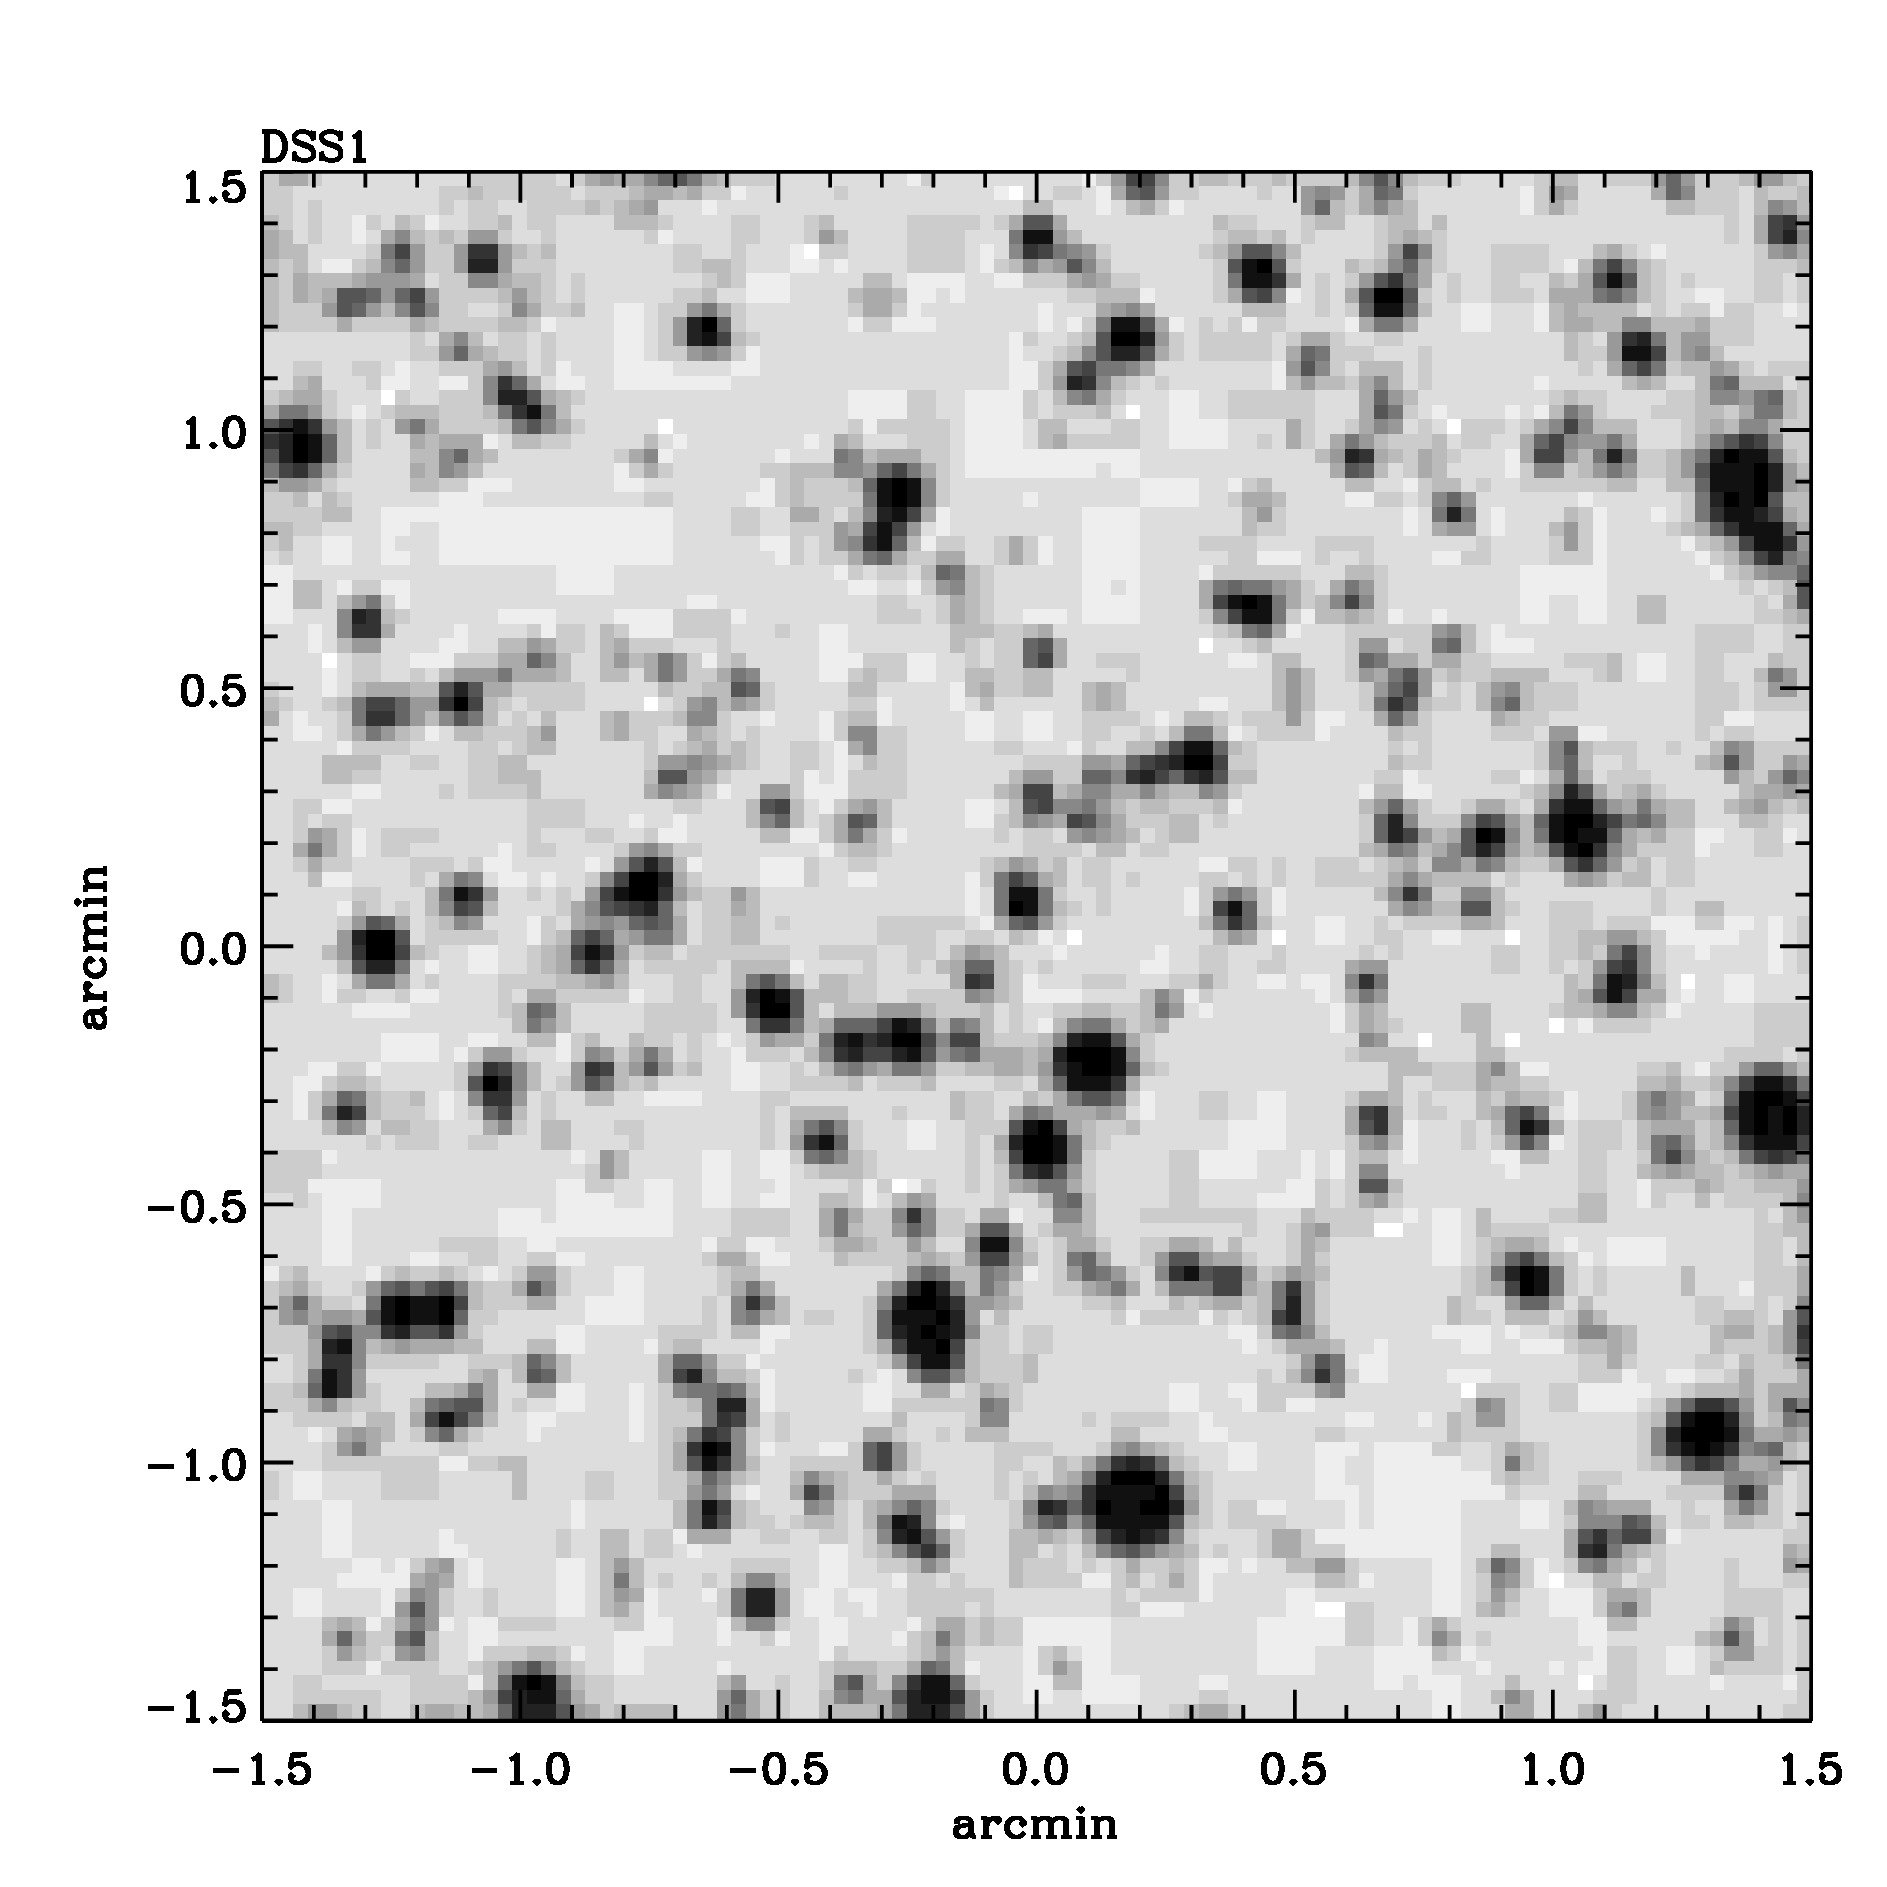 Optical image for SWIFT J2015.9+3715